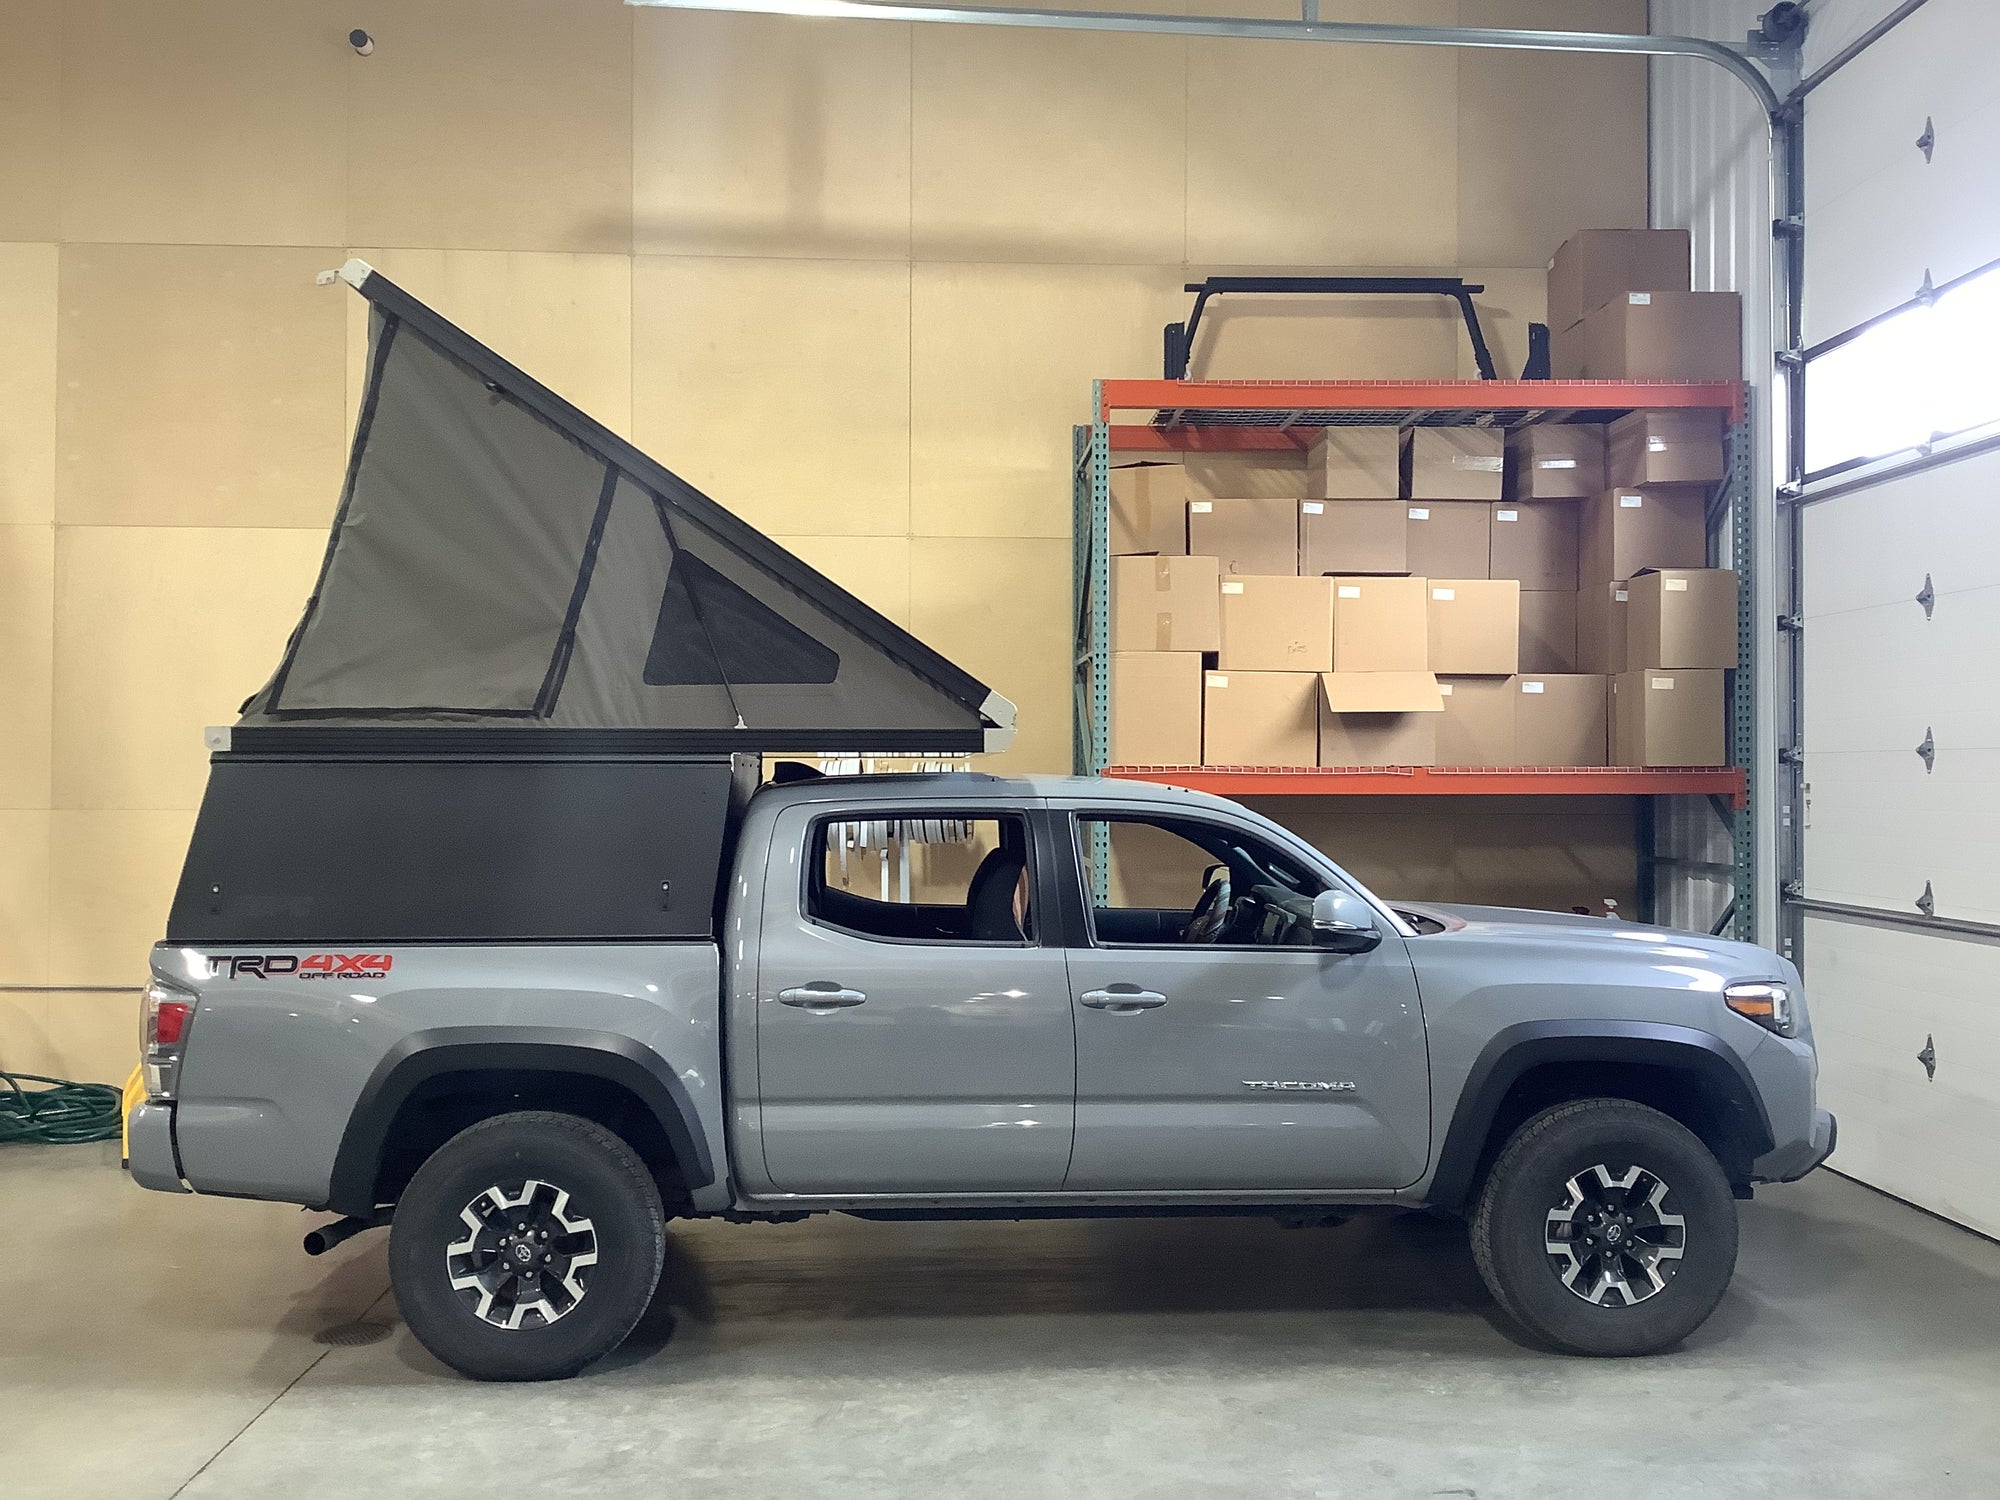 2020 Toyota Tacoma Camper - Build #4192